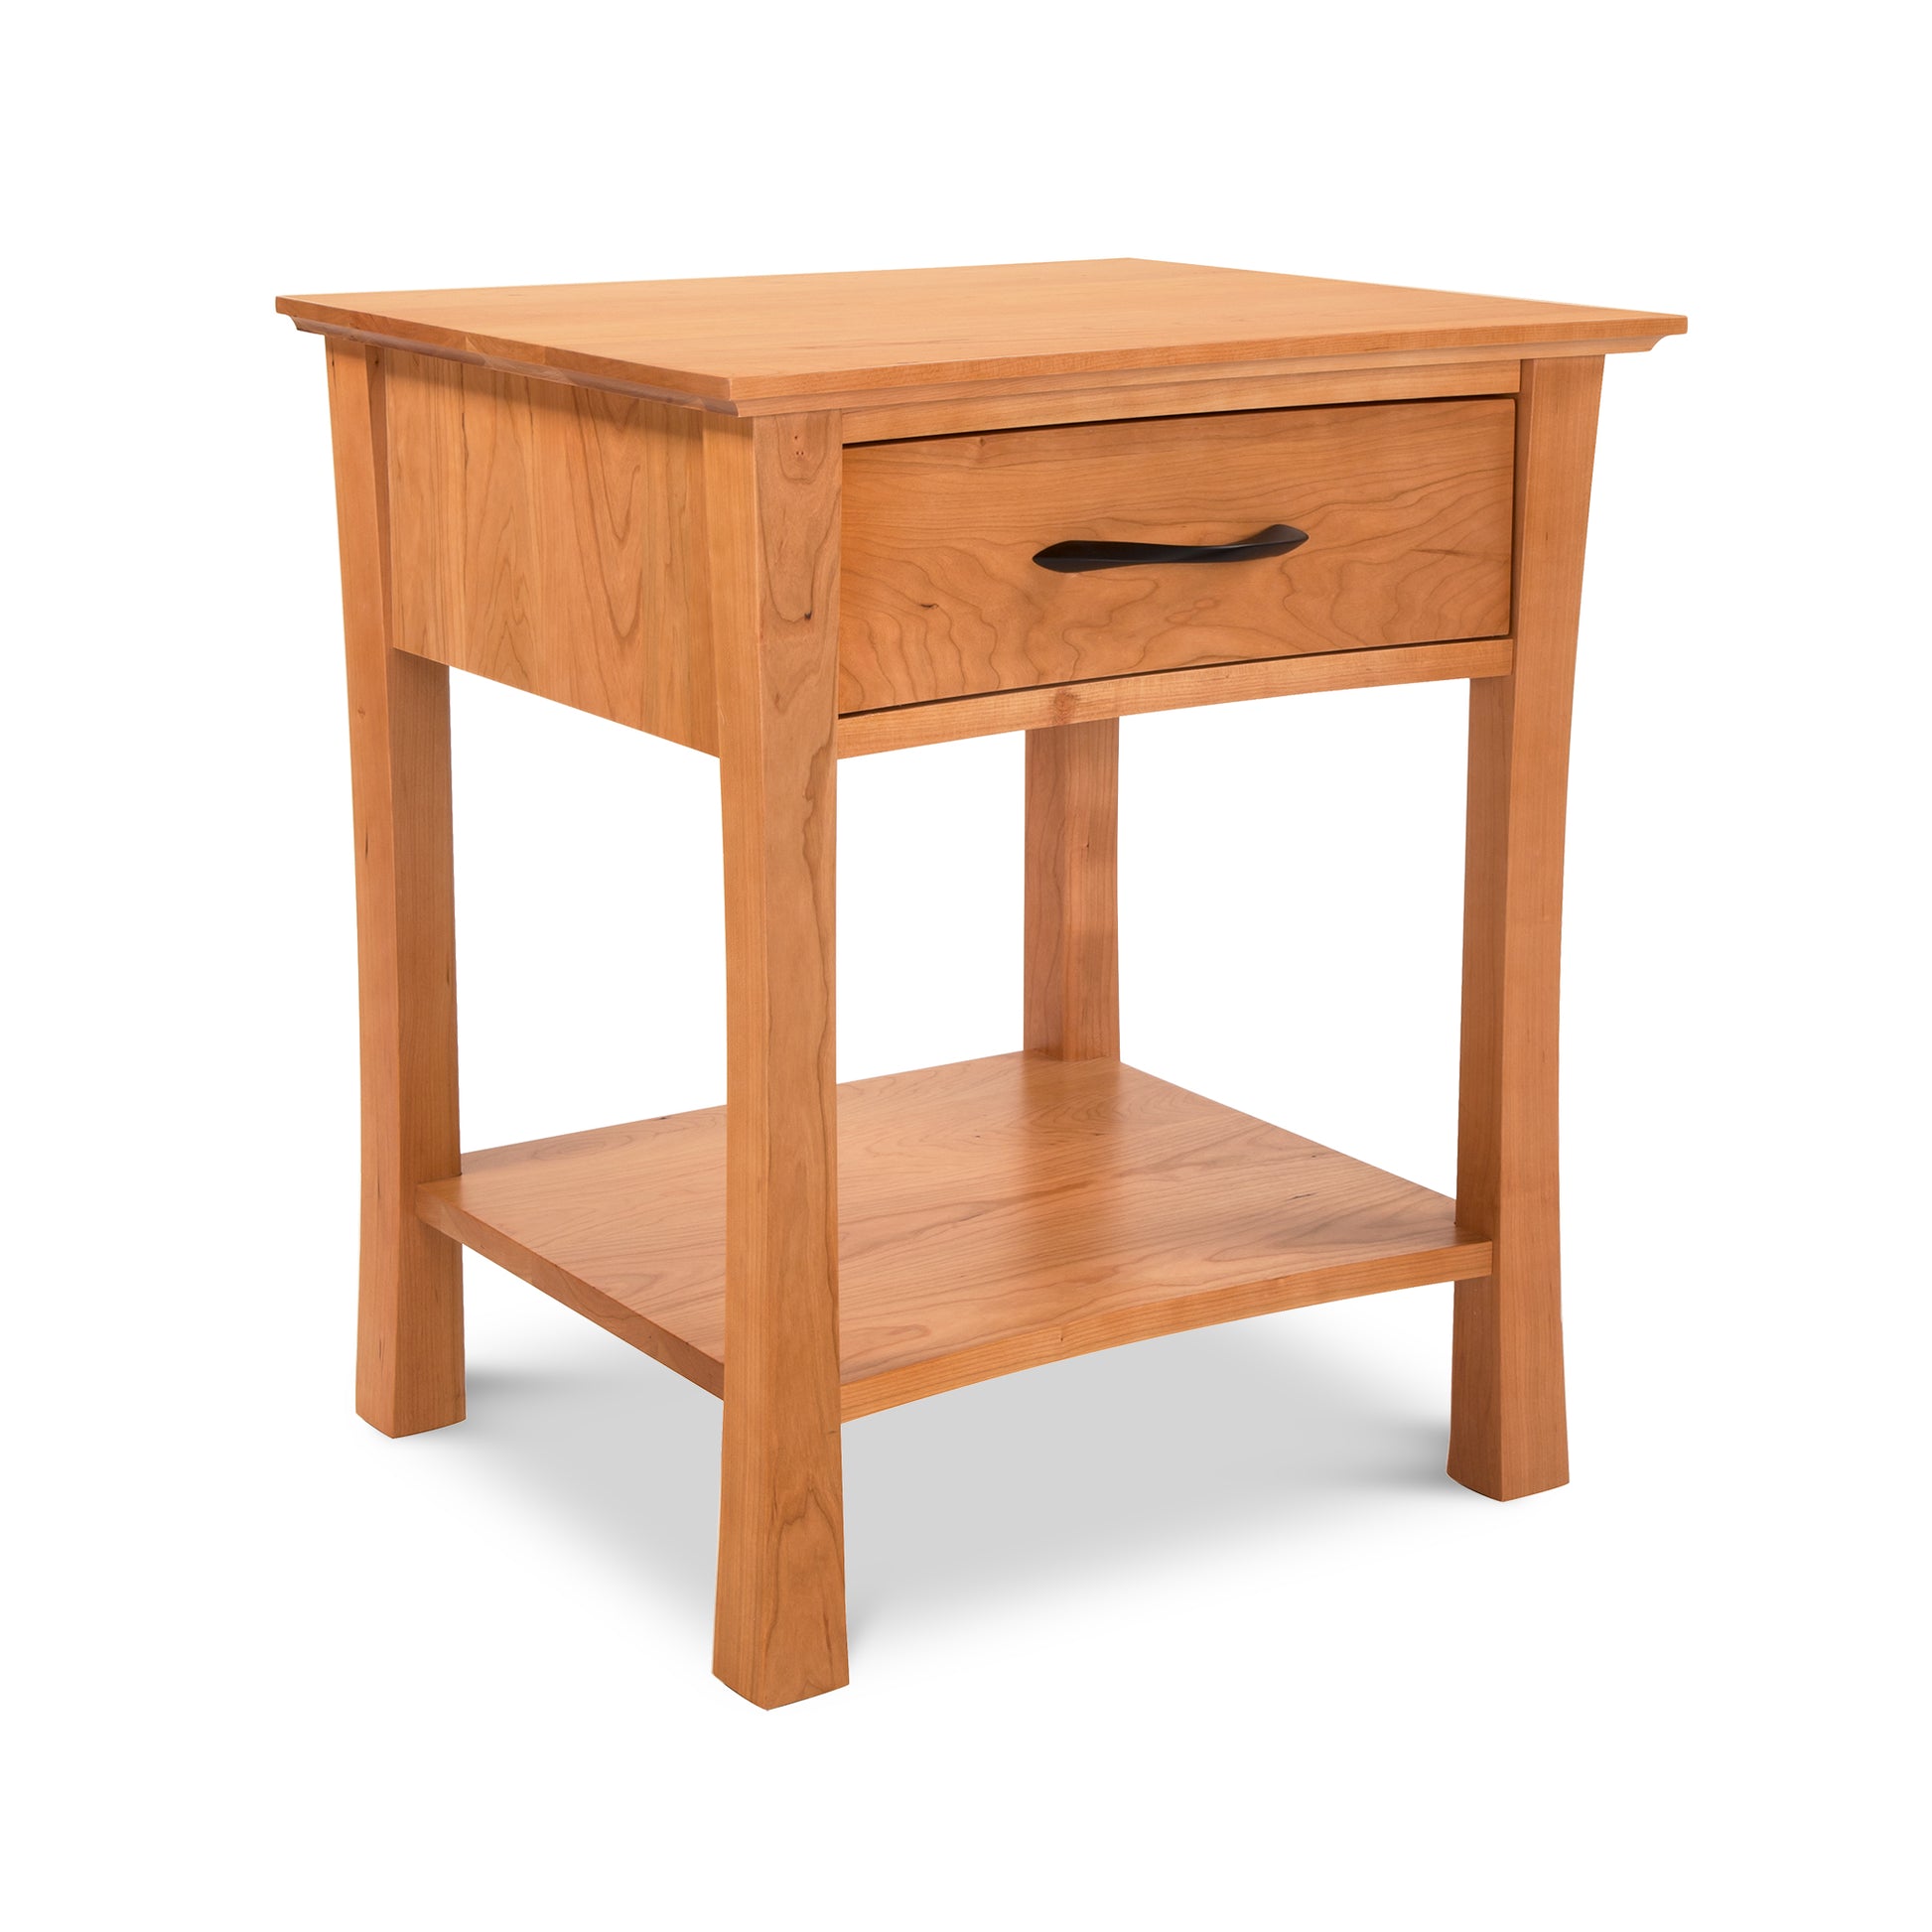 A Lyndon Furniture Green Mountain 1-Drawer Open Shelf Nightstand.